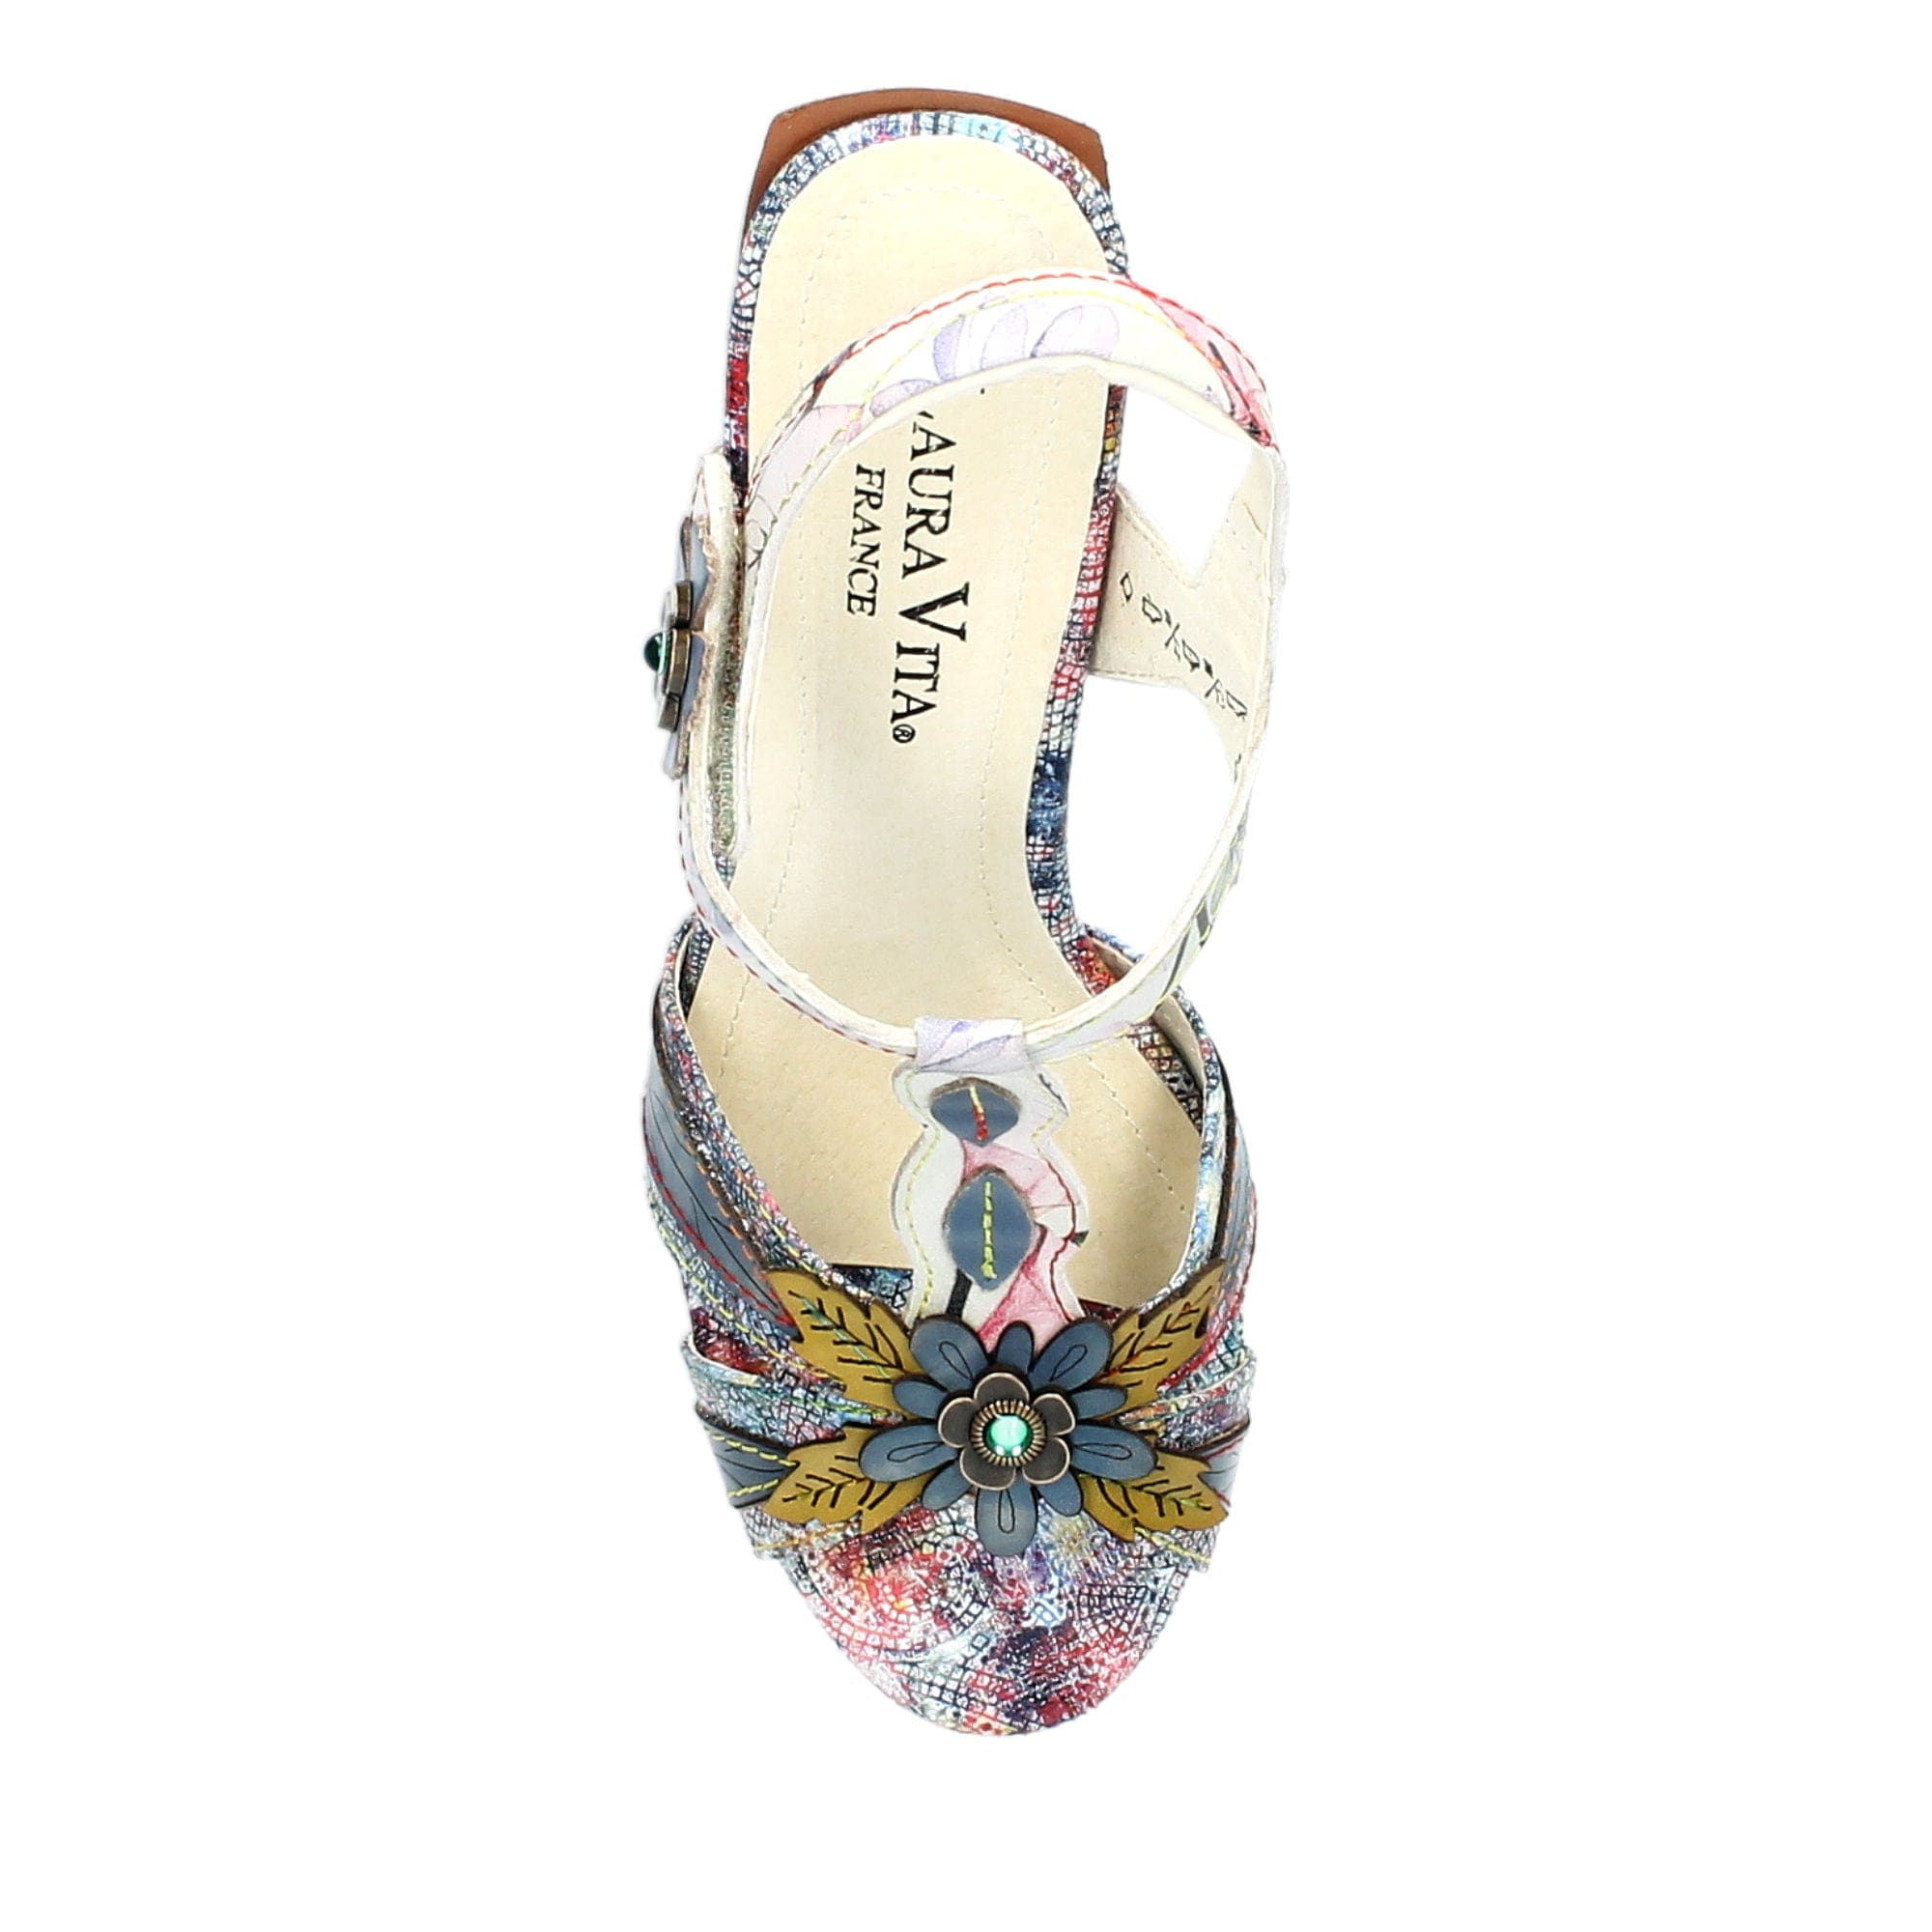 Shoe NAYAO 03 - Sandal